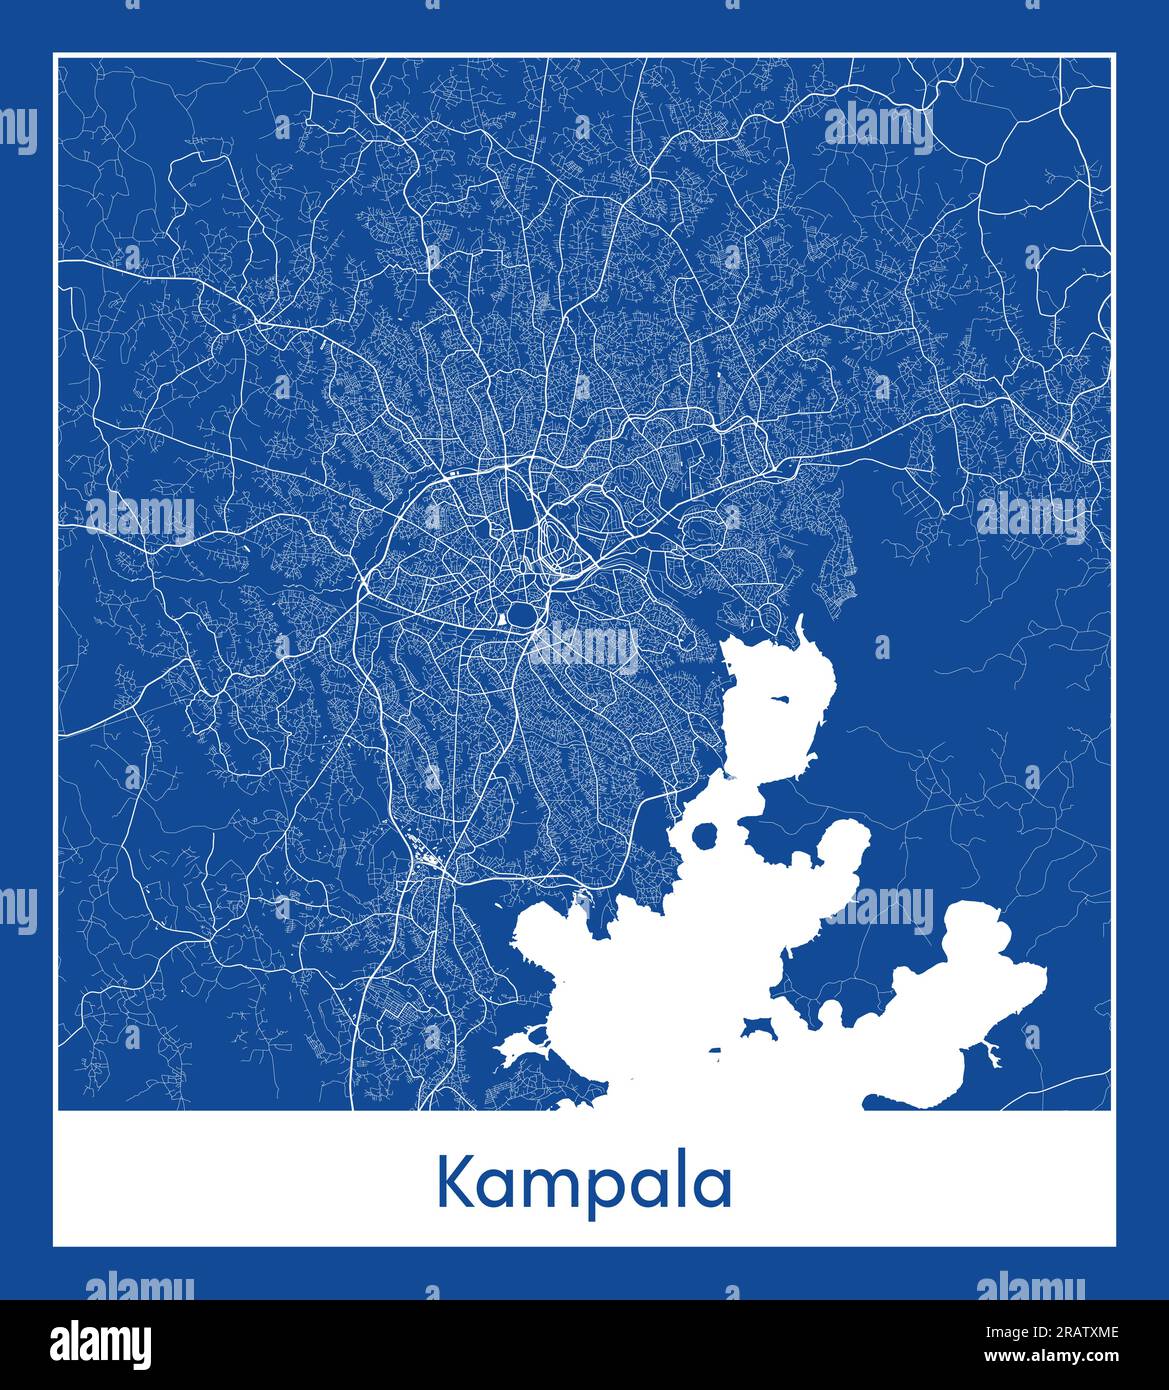 Kampala Uganda Africa City map blue print vector illustration Stock Vector